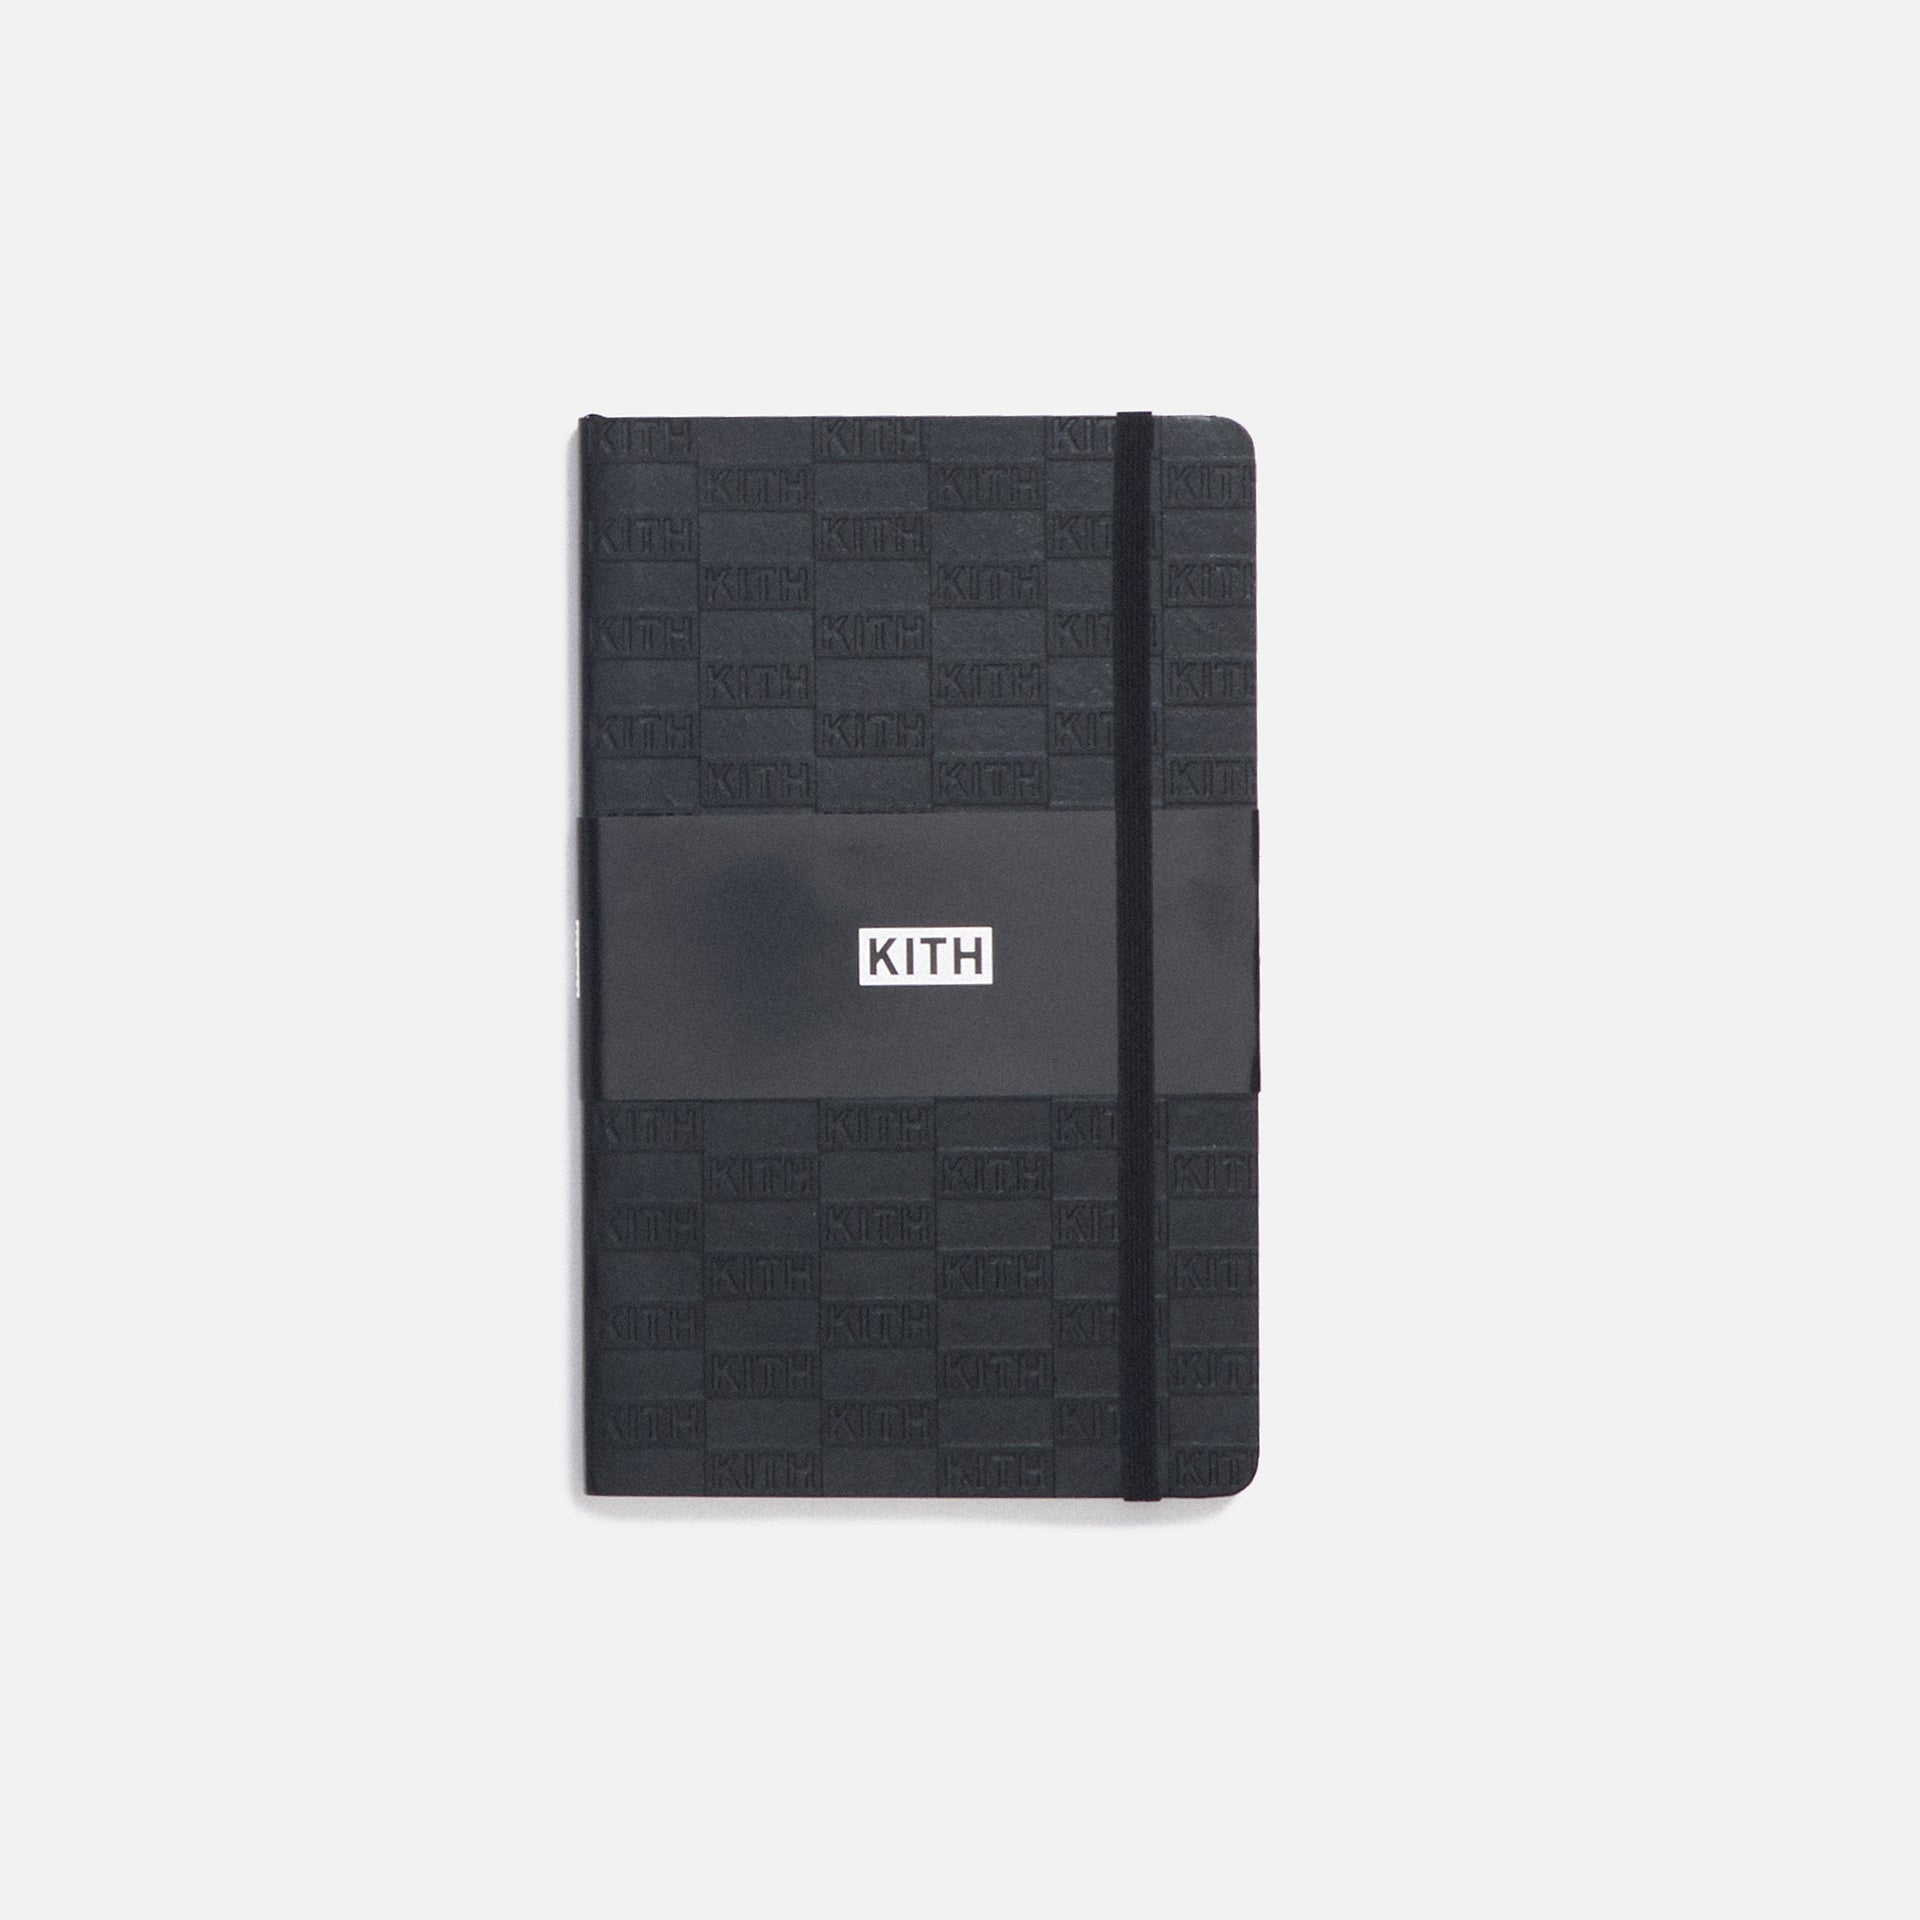 Kith Moleskine Notebook - Black